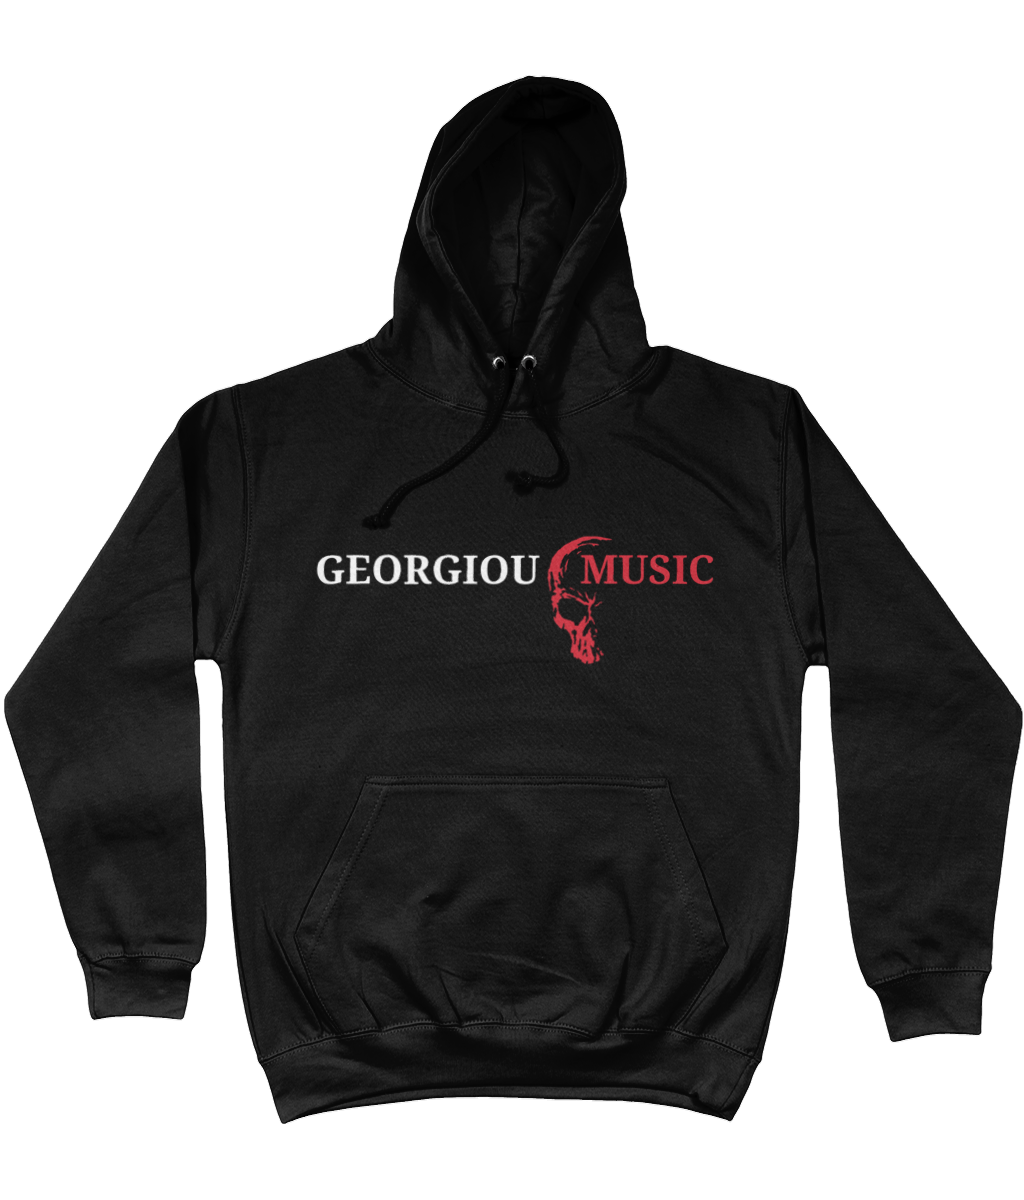 Georgiou Music - Lost Soul